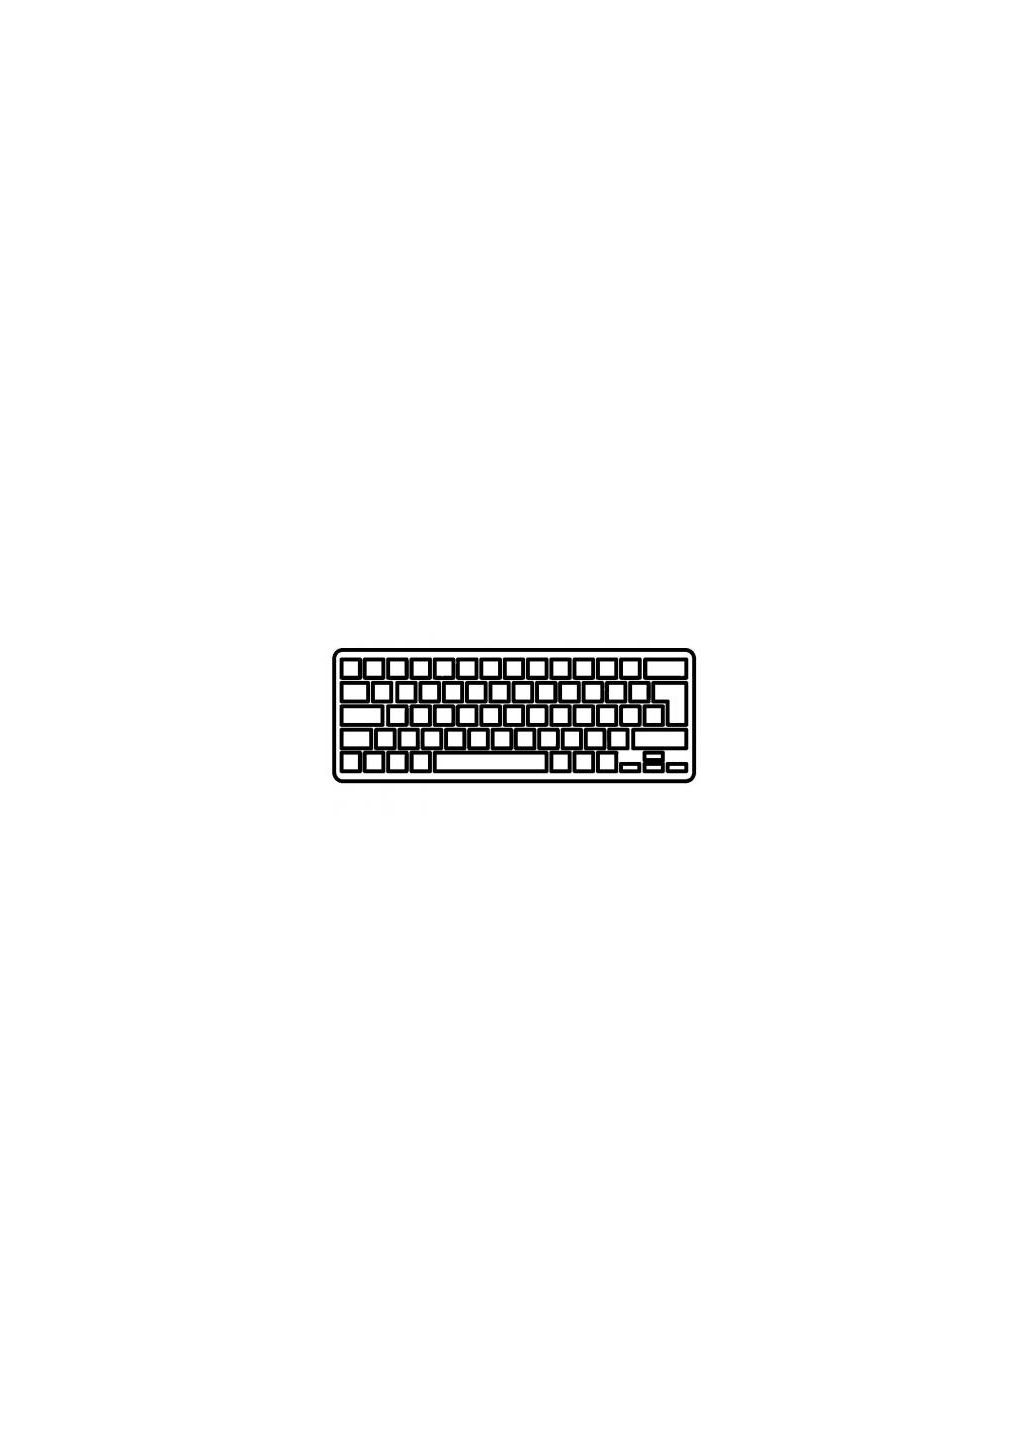 Клавиатура ноутбука (A43334) Acer travelmate 6000 series черная ua (276706600)